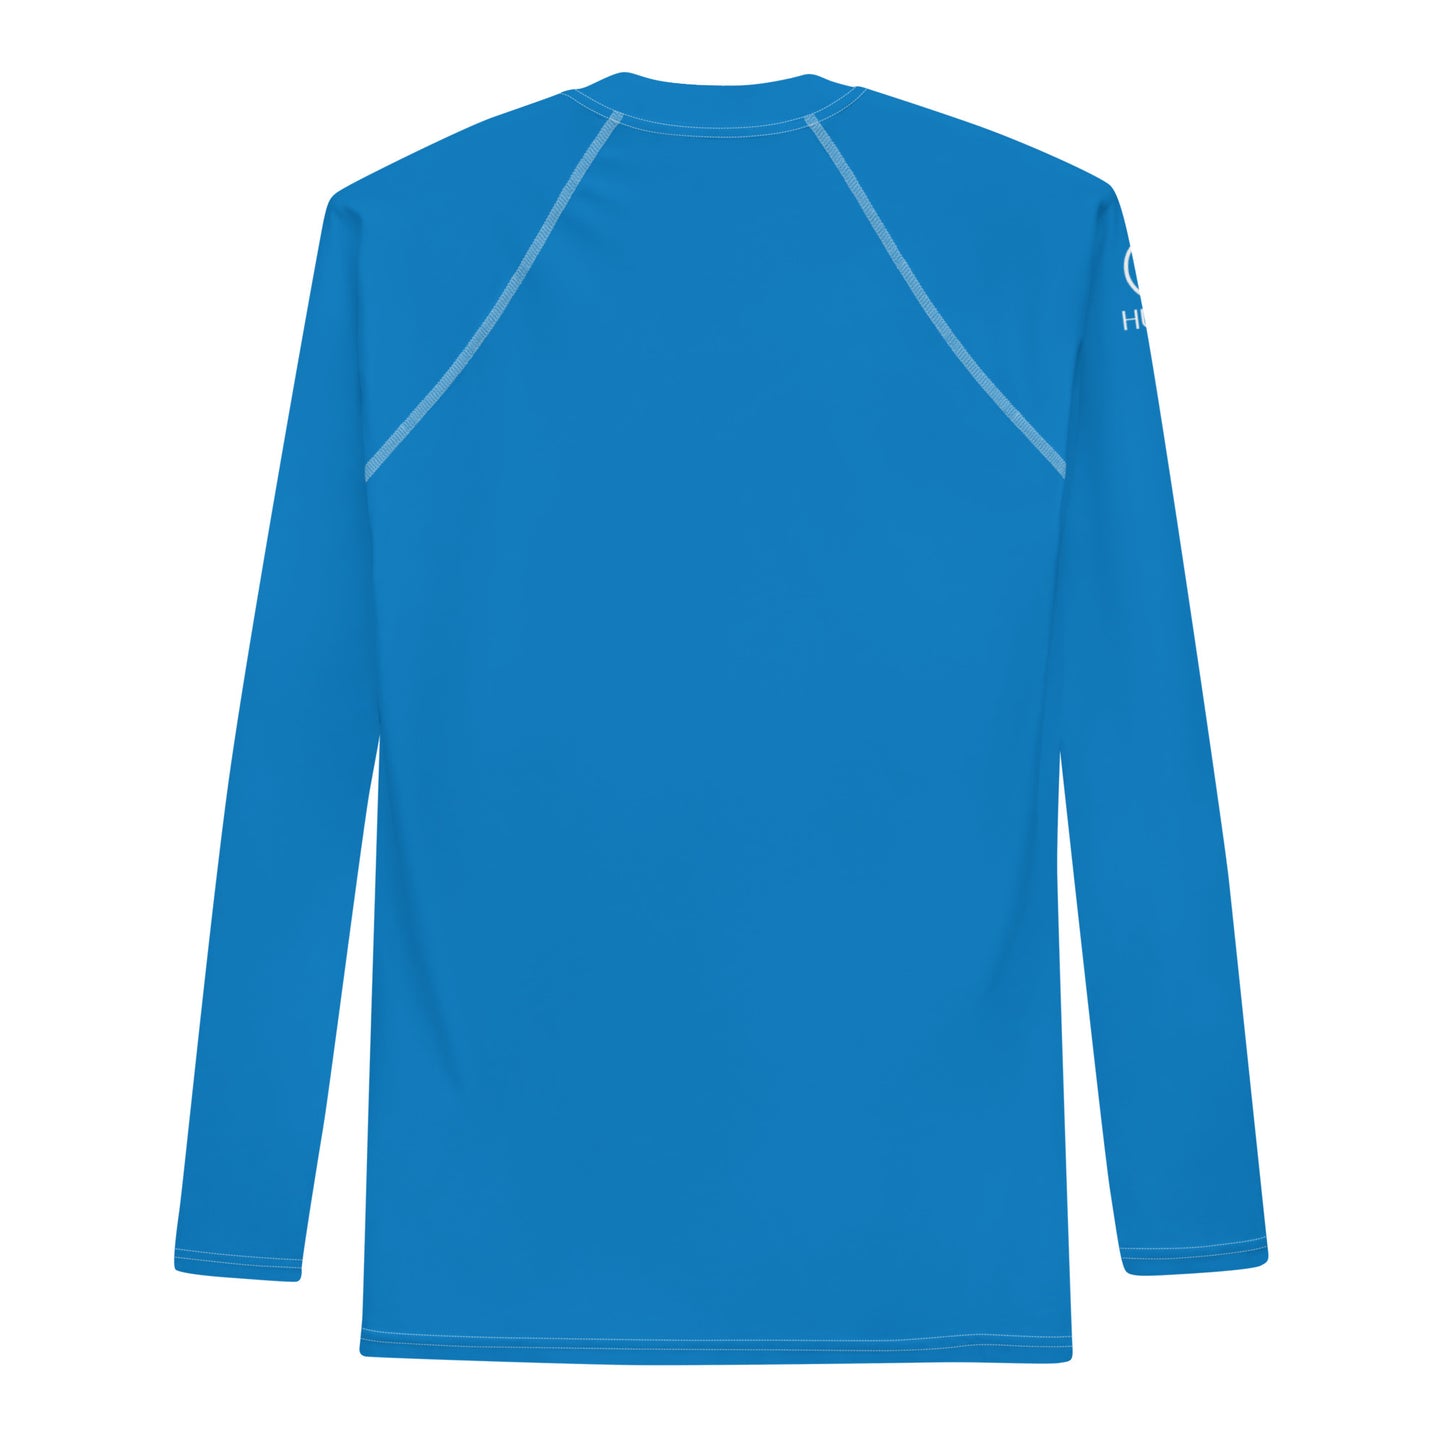 Humble sportswear, men's lazer blue long sleeve compression rash guard, long sleeve tops for gym